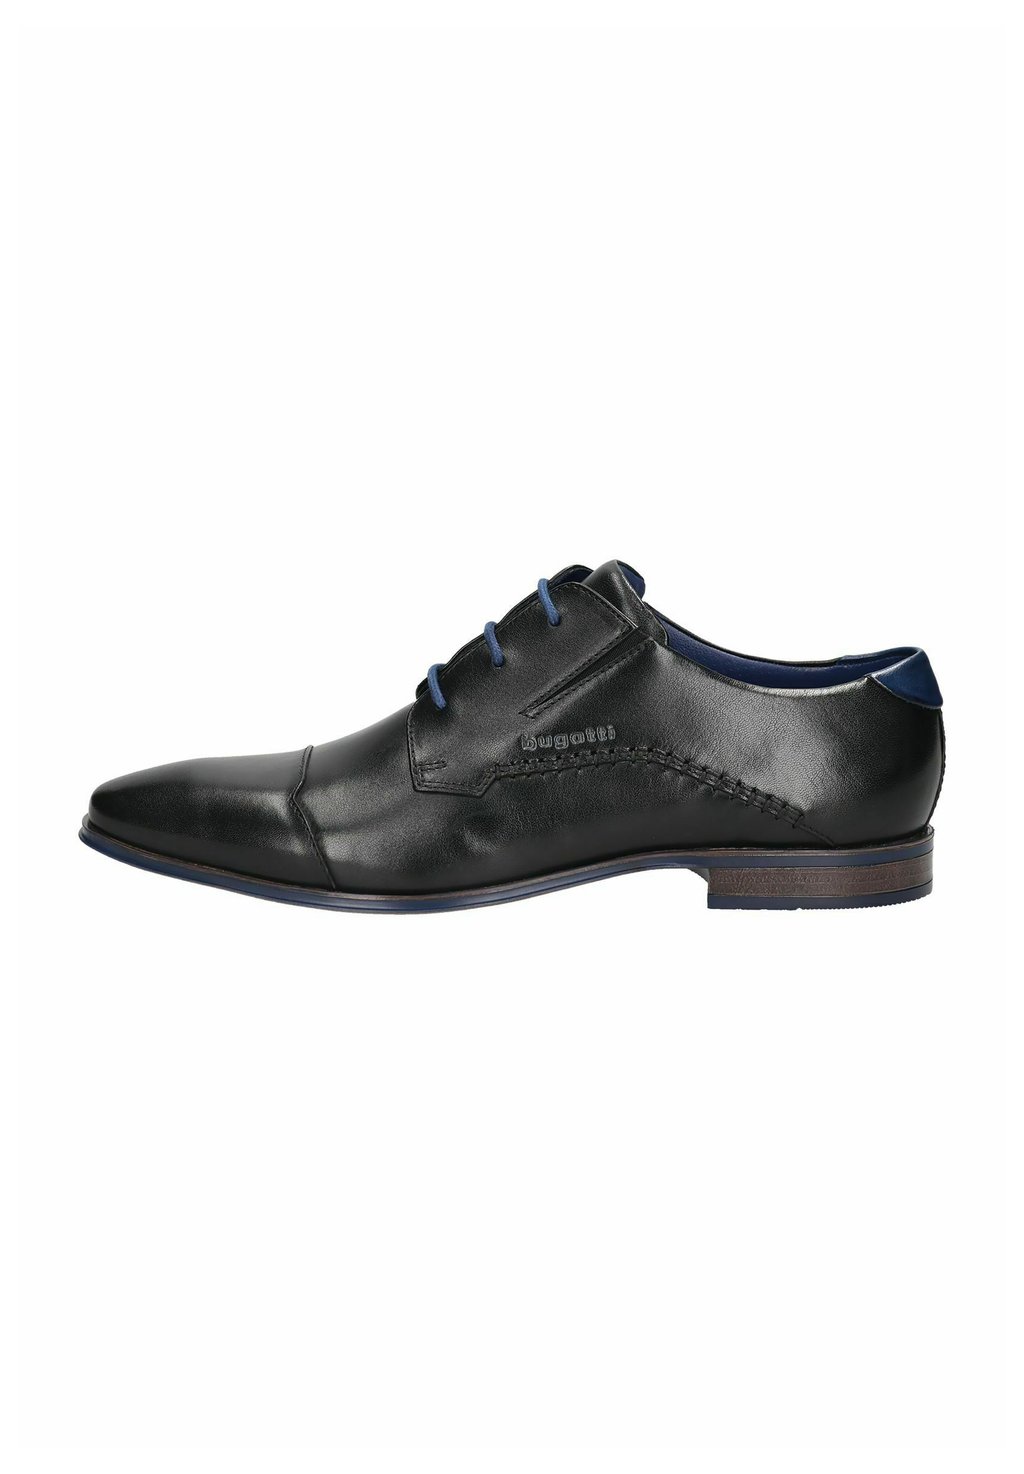 Деловые туфли на шнуровке MORINO bugatti, цвет schwarz деловые туфли на шнуровке bugatti цвет black